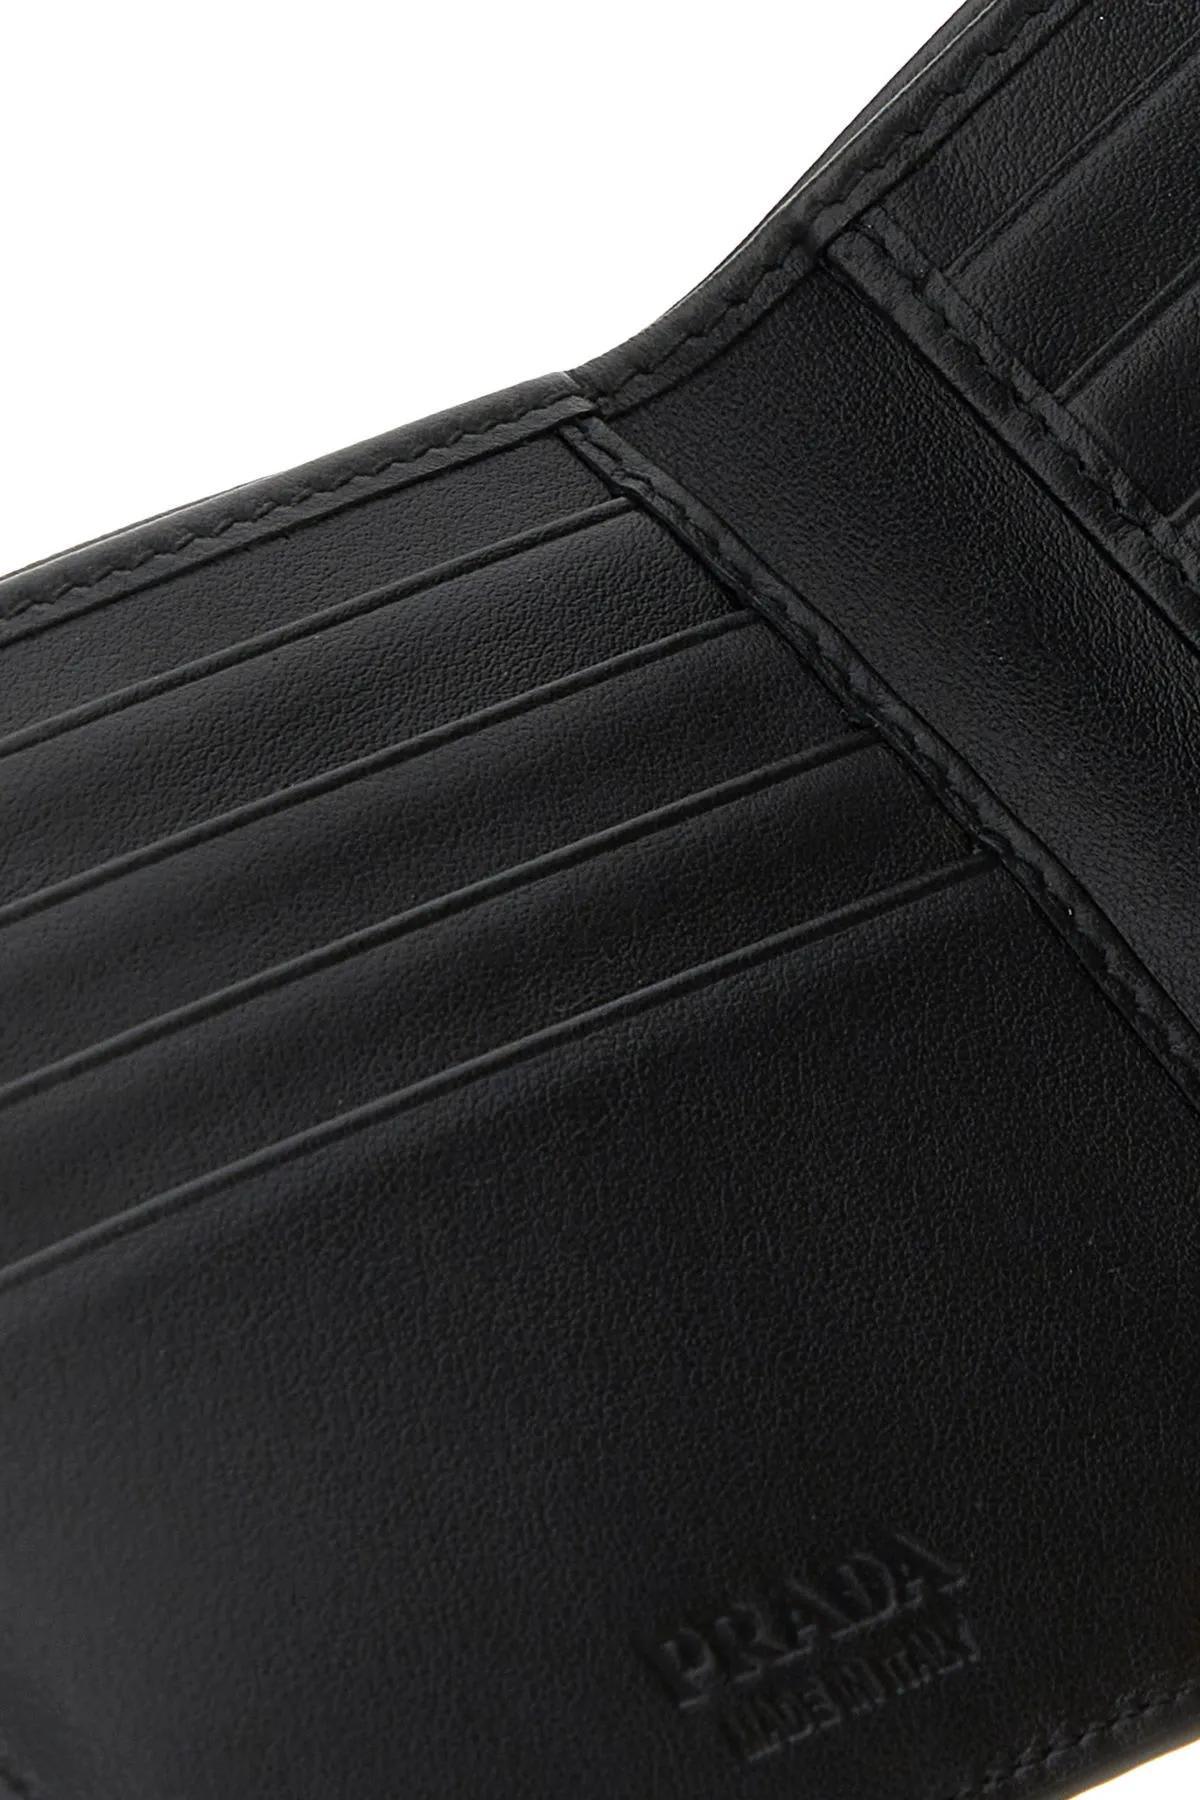 Prada Black leather wallet